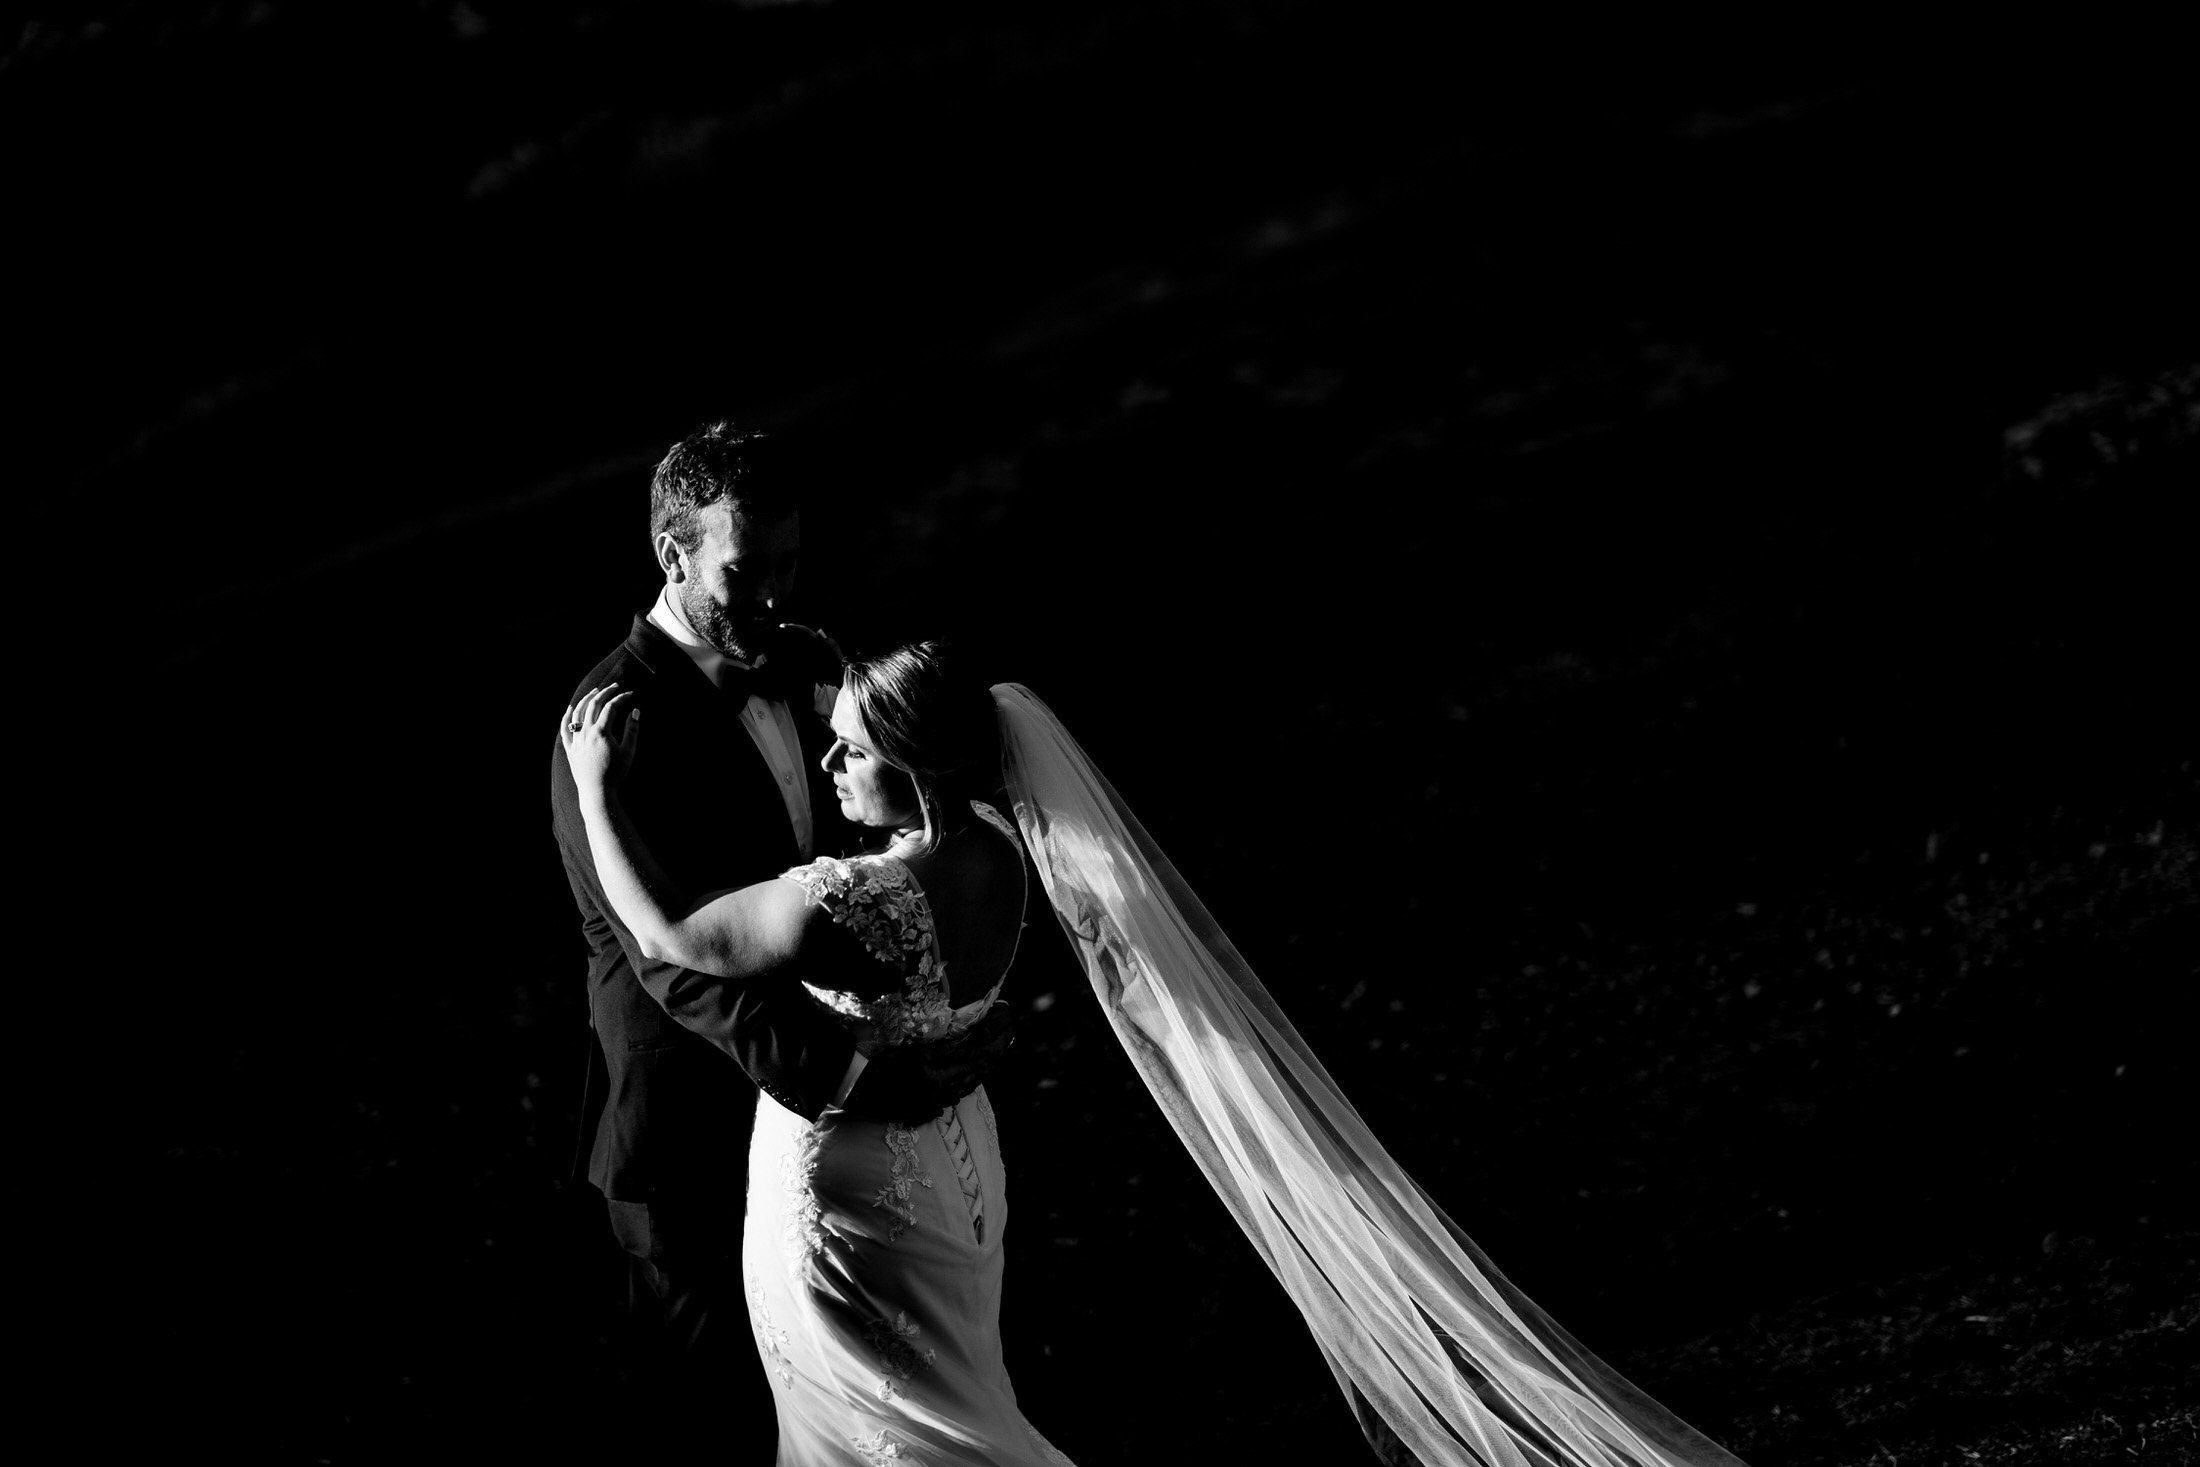 Auckland Wedding Venue | Auckland Wedding Photography | Auckland Wedding Photographer and Videography | Riverhead Wedding | Auckland Wedding Venue | The Boat House